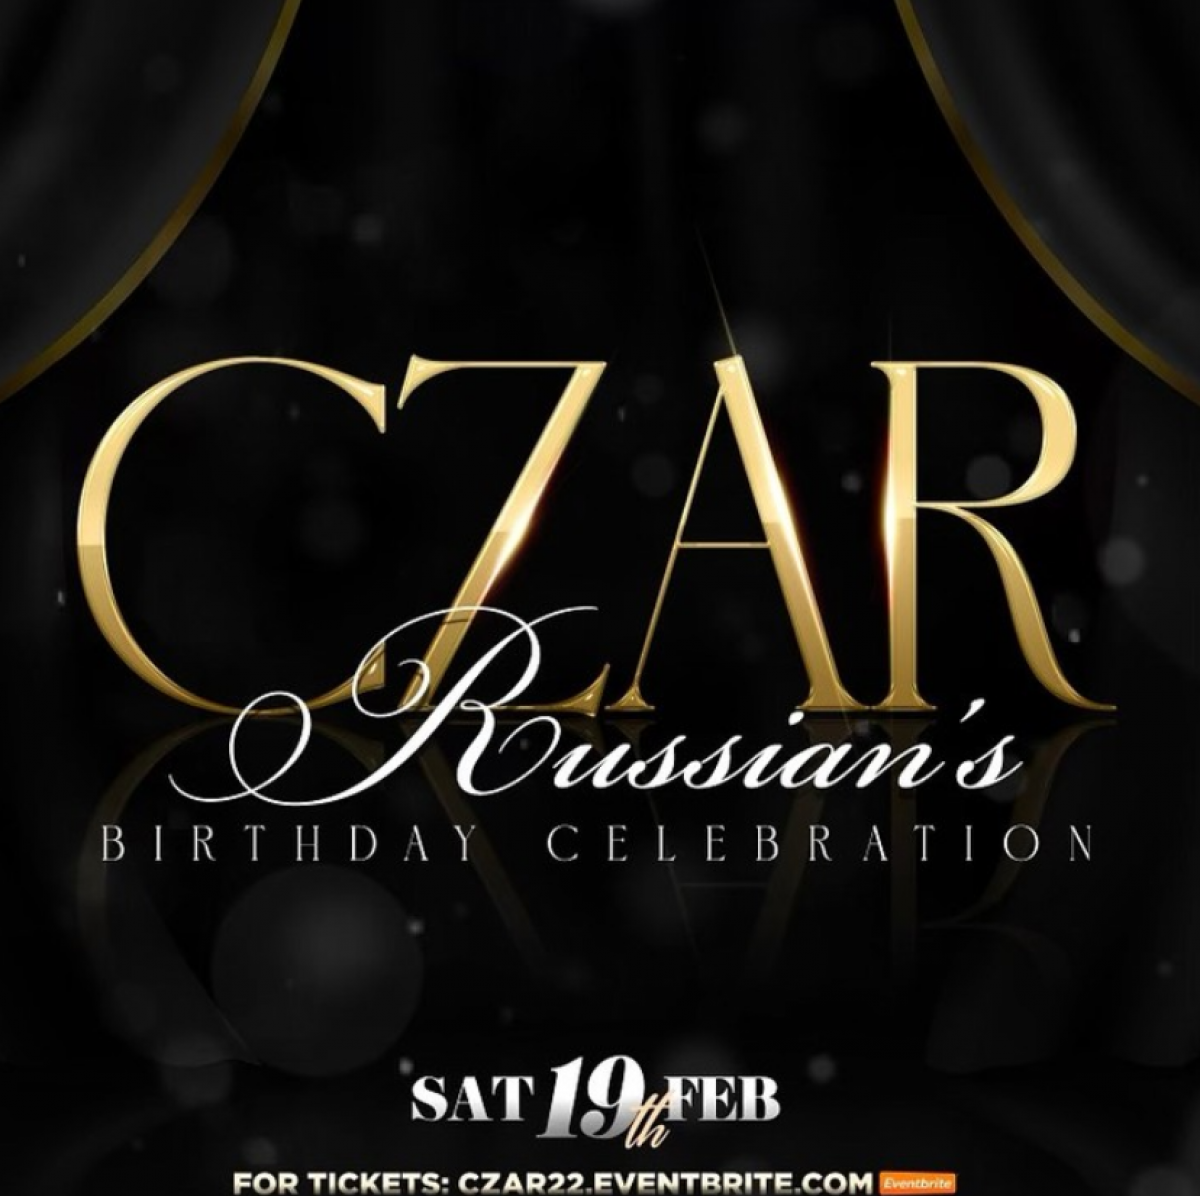 CZAR (Russian's Birthday) flyer or graphic.